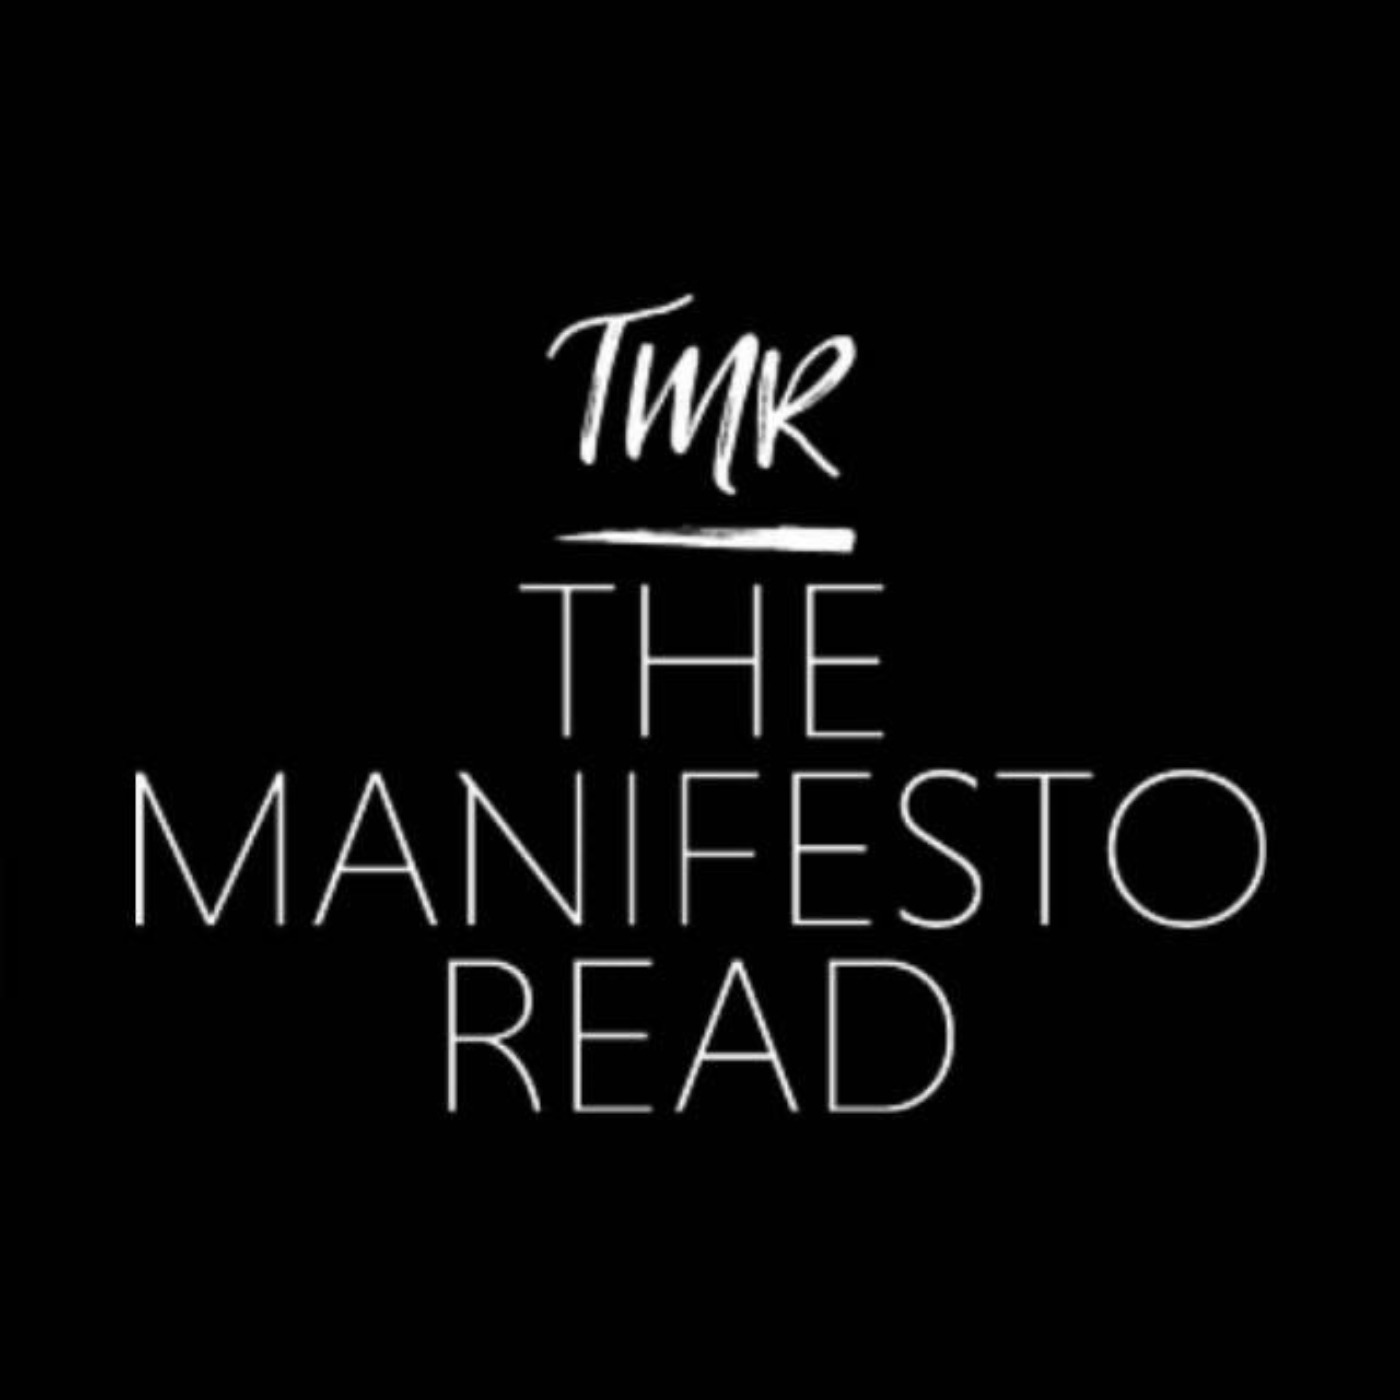 The Manifesto Read: 2020 Next Steps